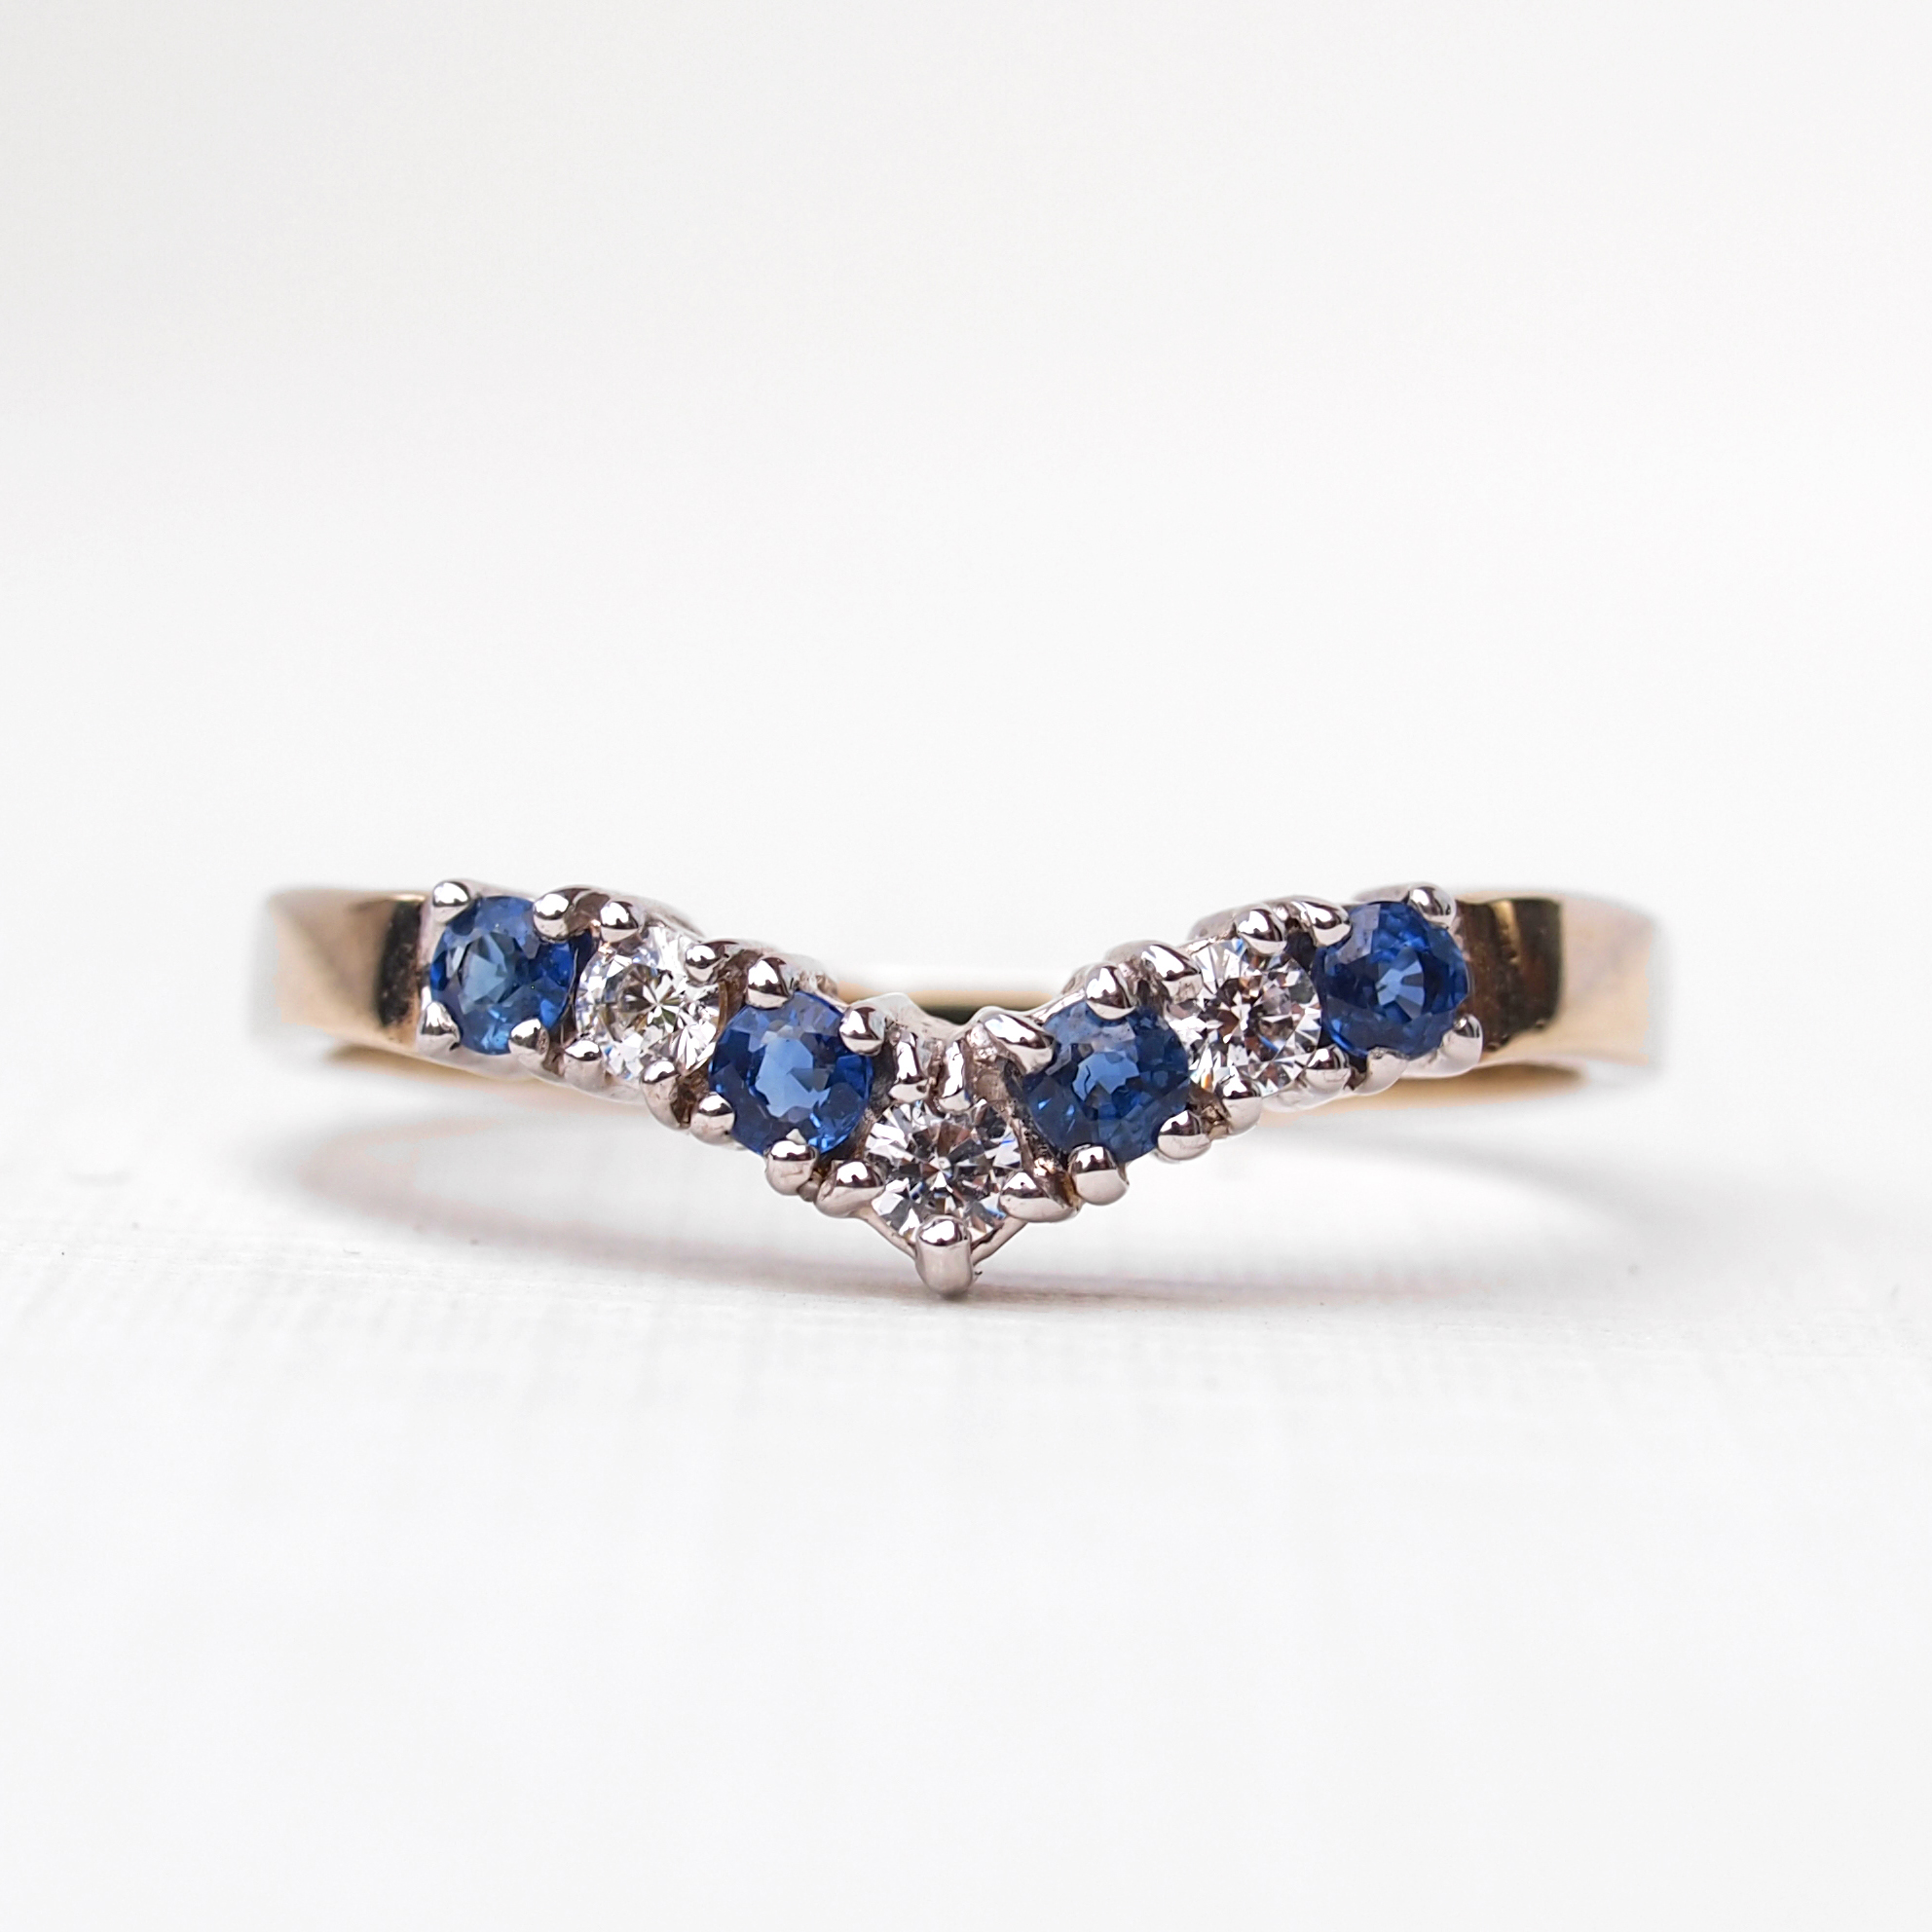 9ct White Gold 0.15CT Diamond Wishbone Wedding Eternity Ring size J | eBay